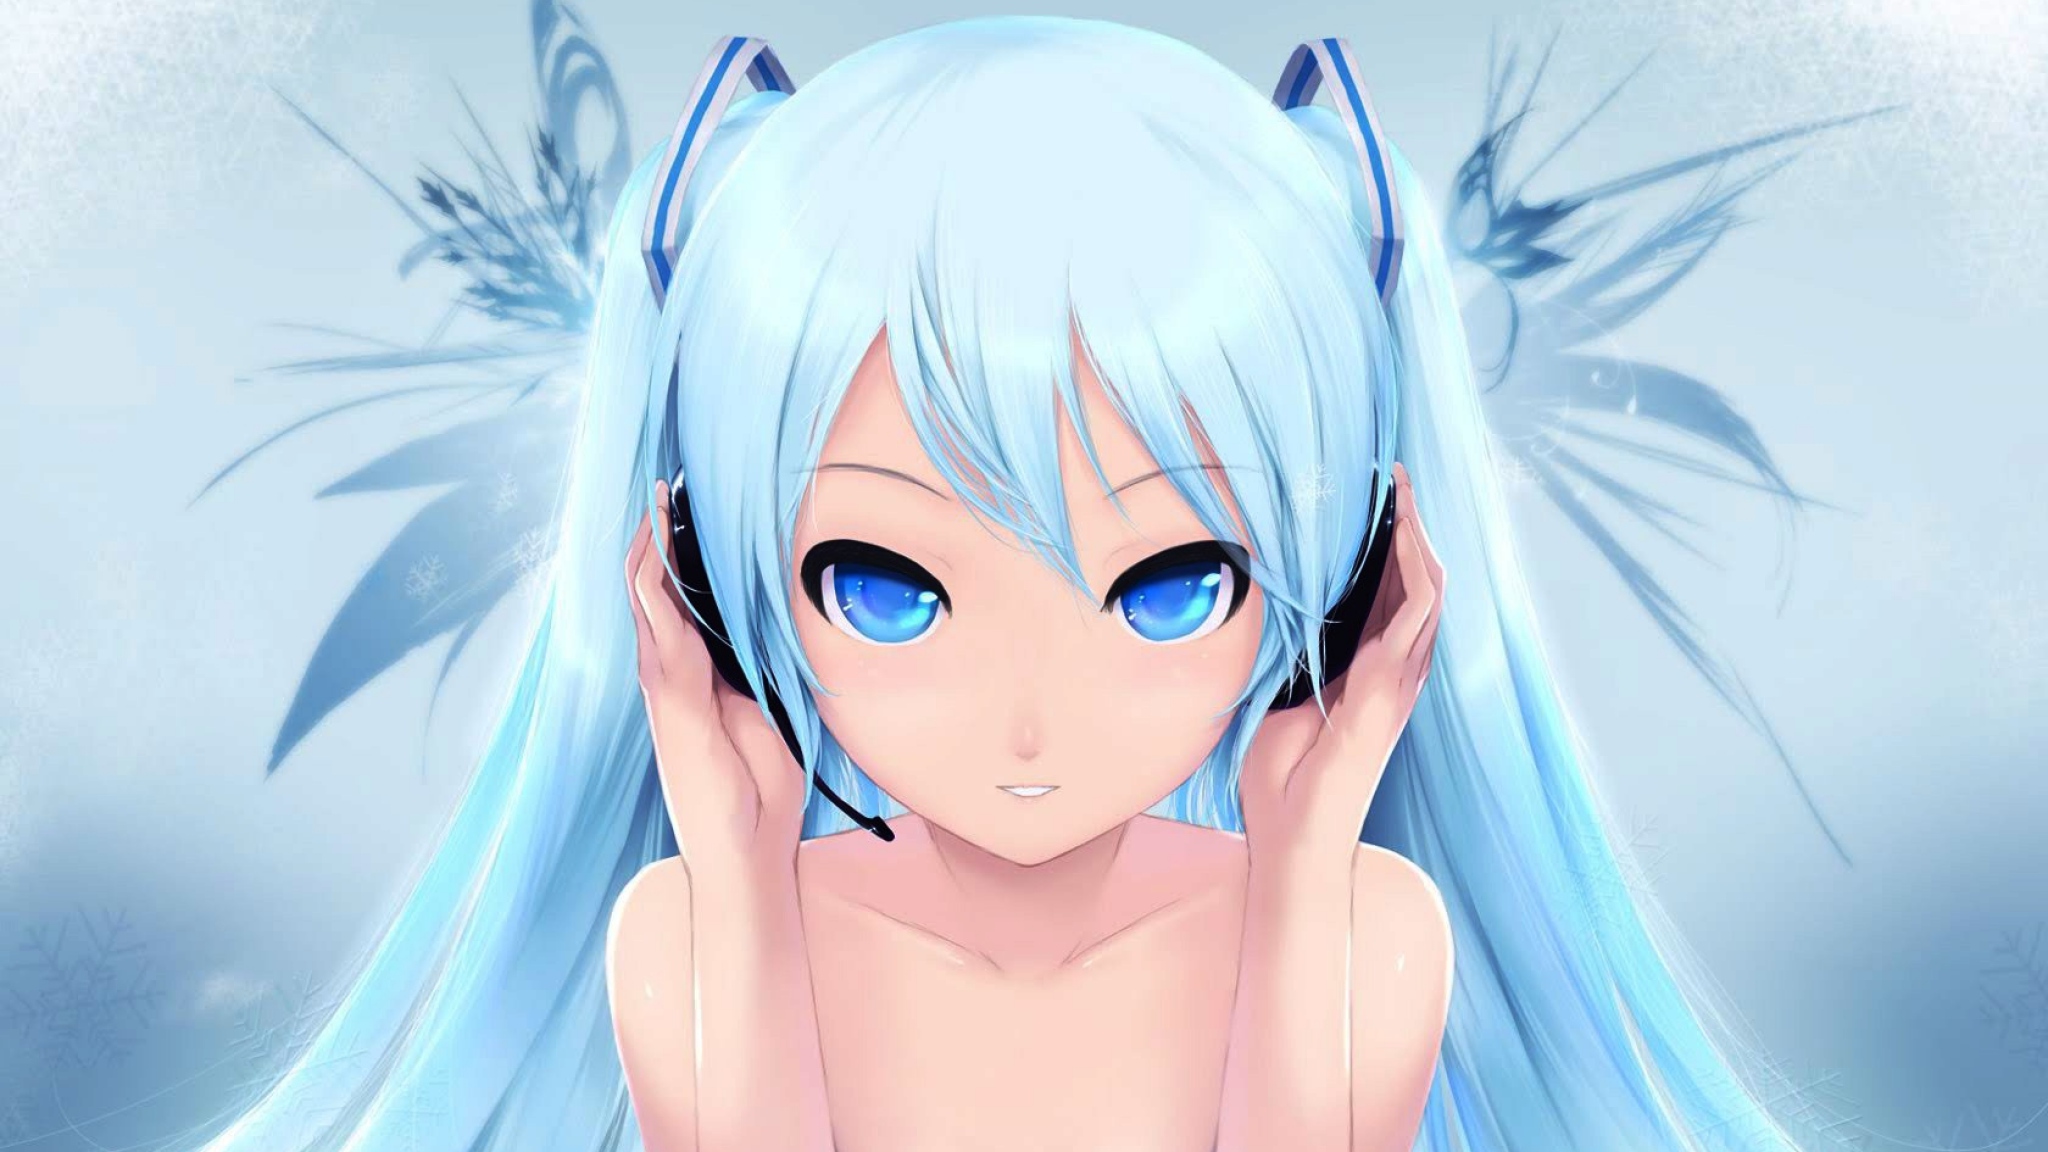 Download 2048x1152 Anime Girl Hair Blue Headphones Wallpaper